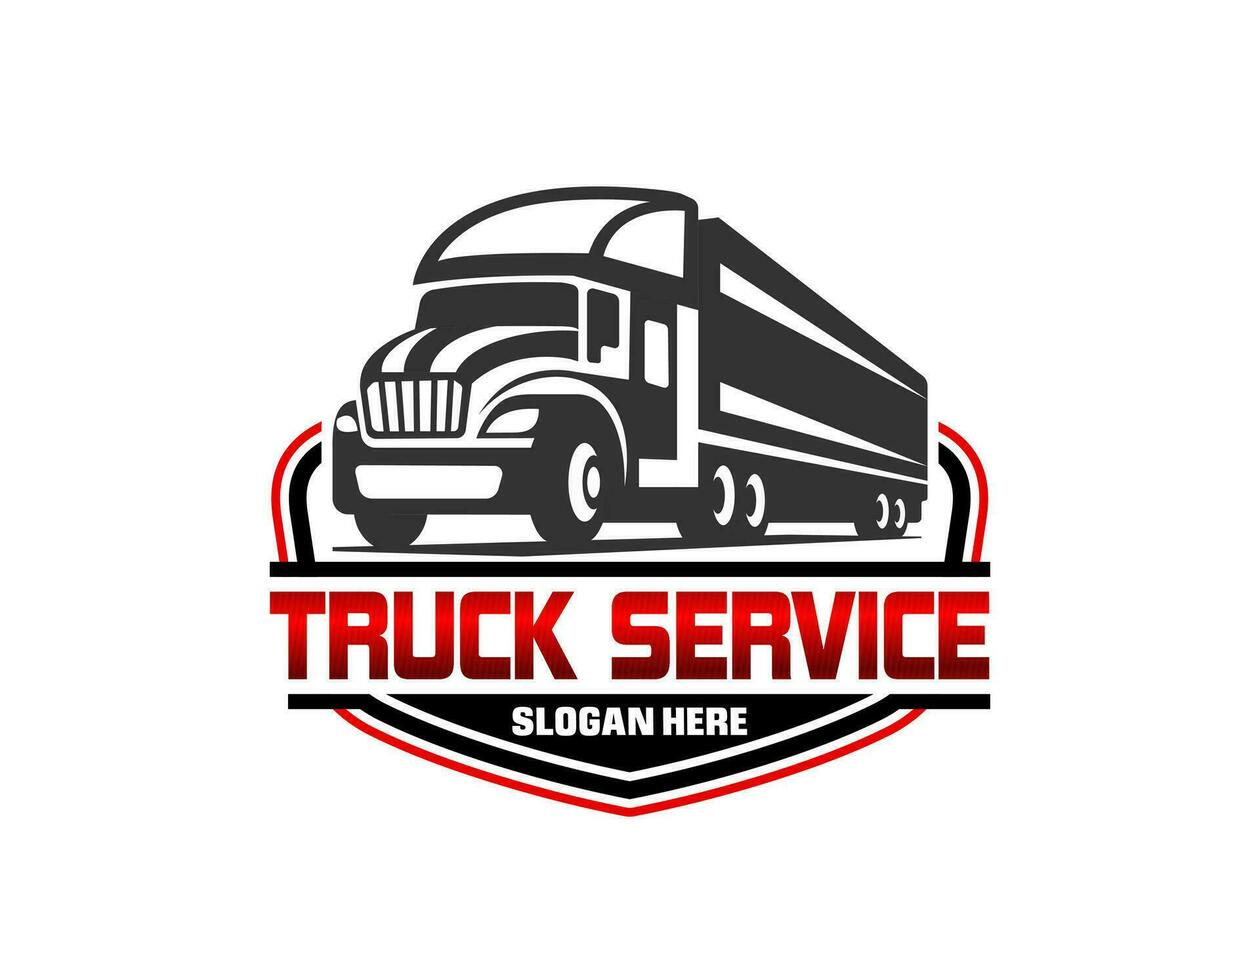 modelo de logotipo de emblema de logotipo de caminhão semi vetor